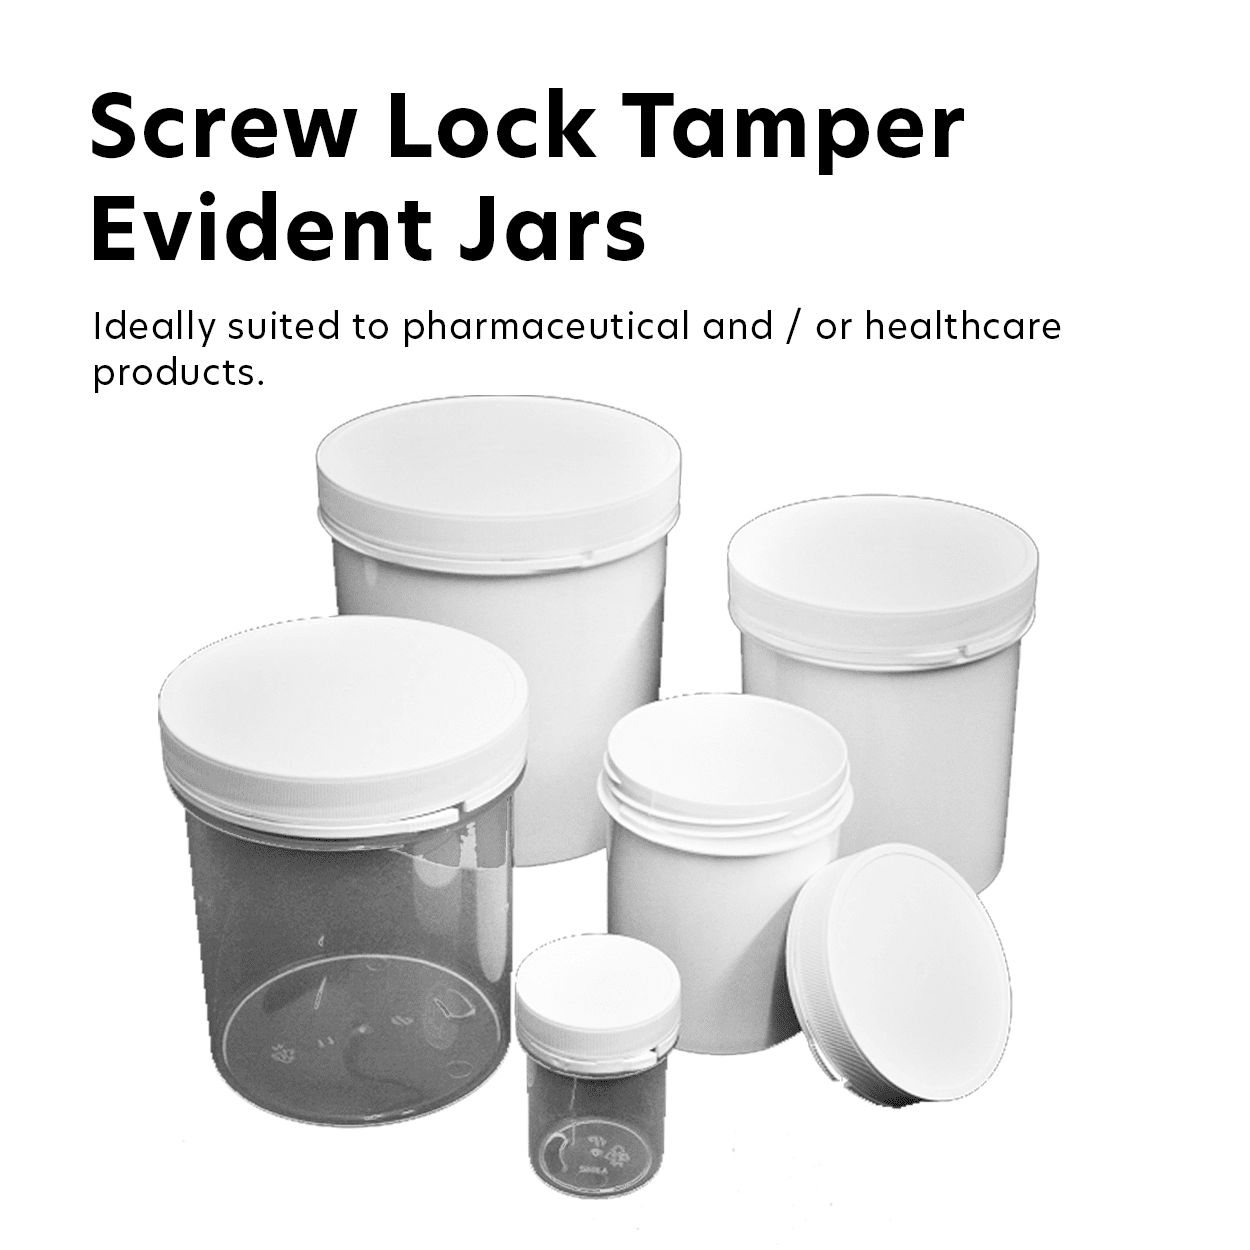 Screw Lock Tamper Evident Jars